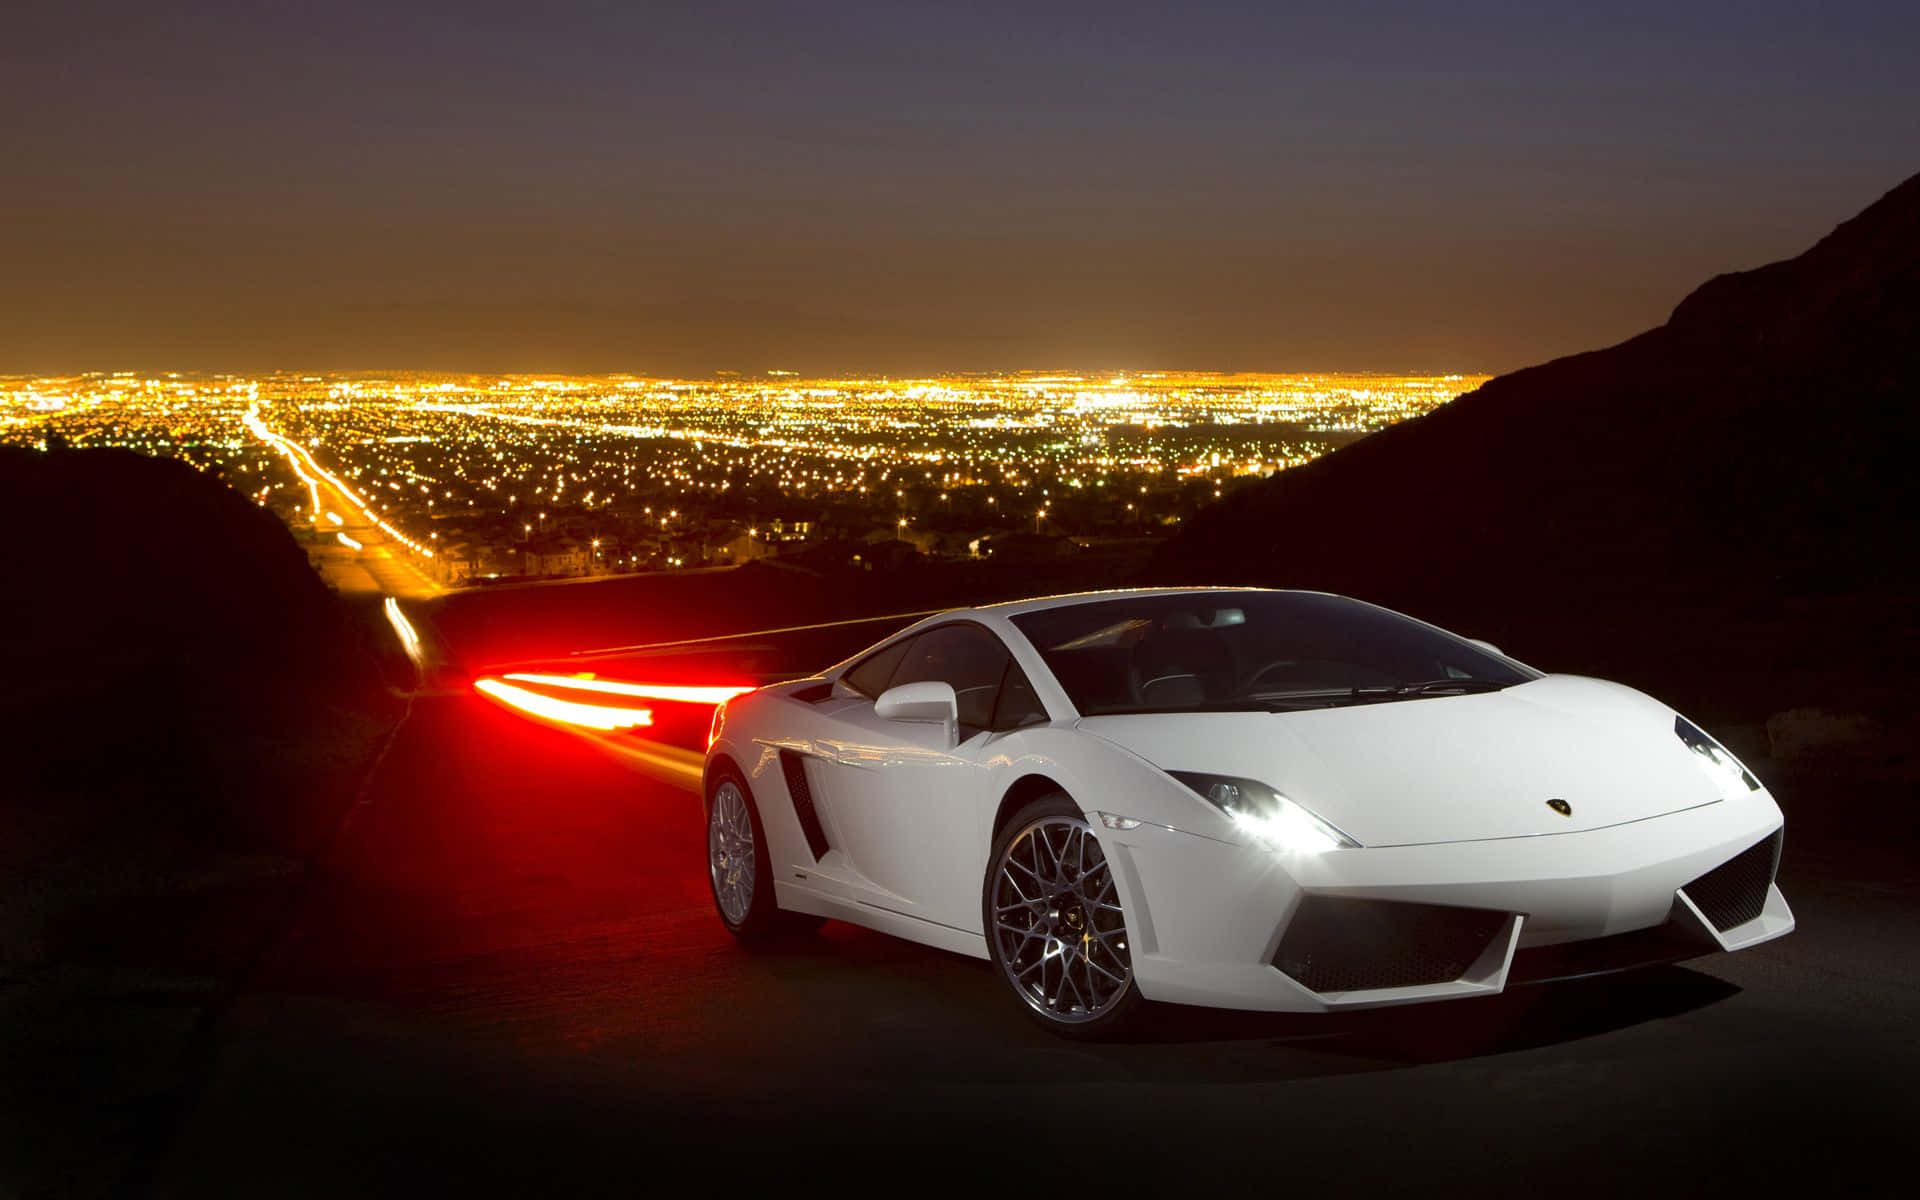 Sleek Lamborghini Gallardo Speeding on the Open Road Wallpaper